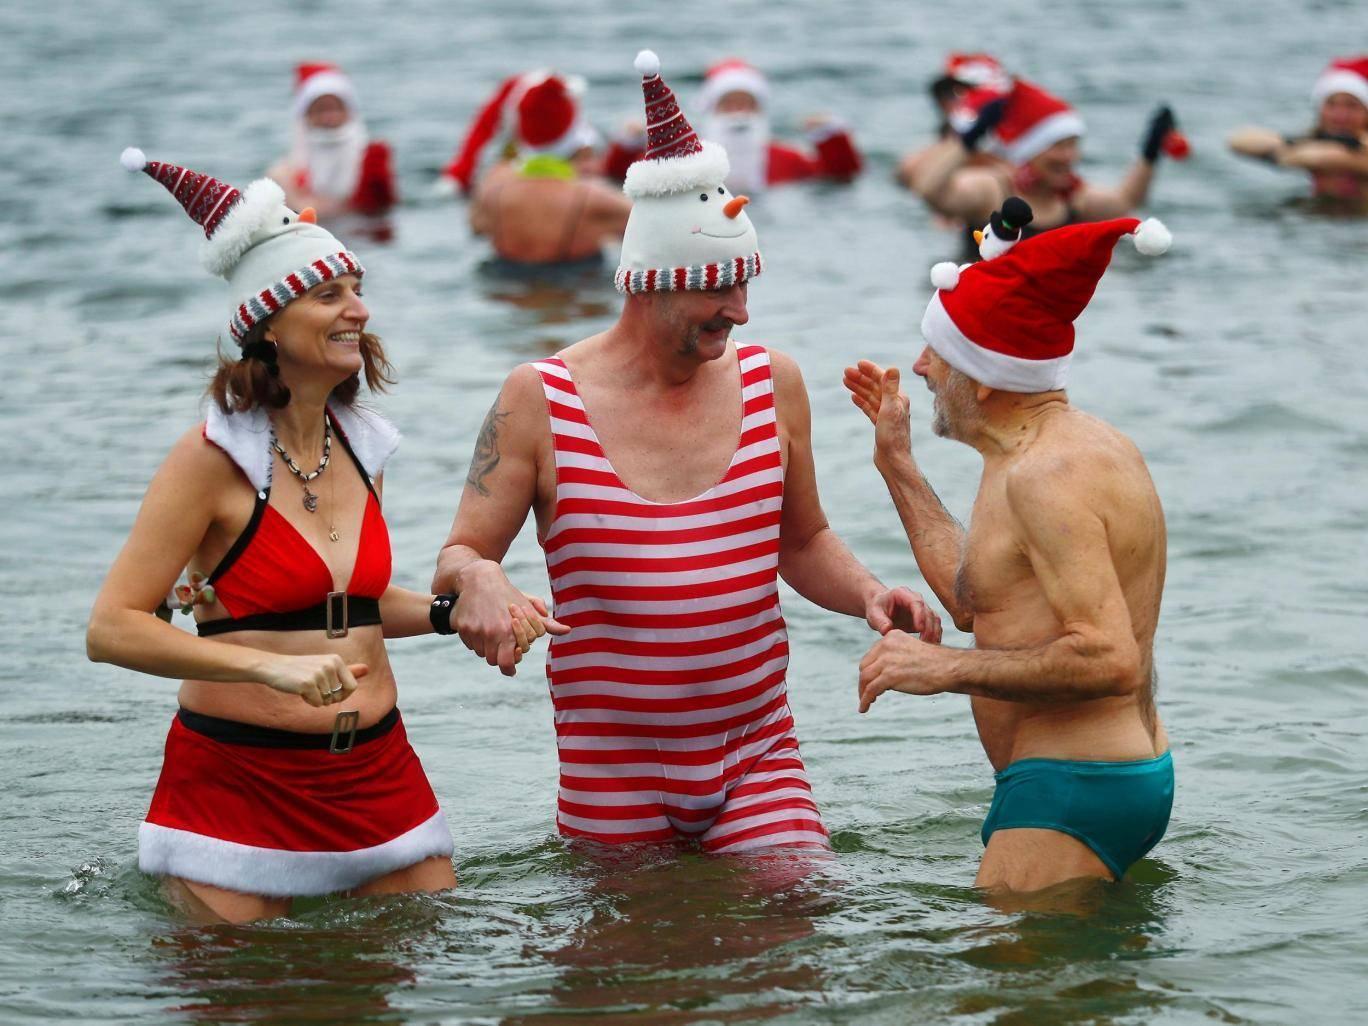 A festive splash in a tautological lake